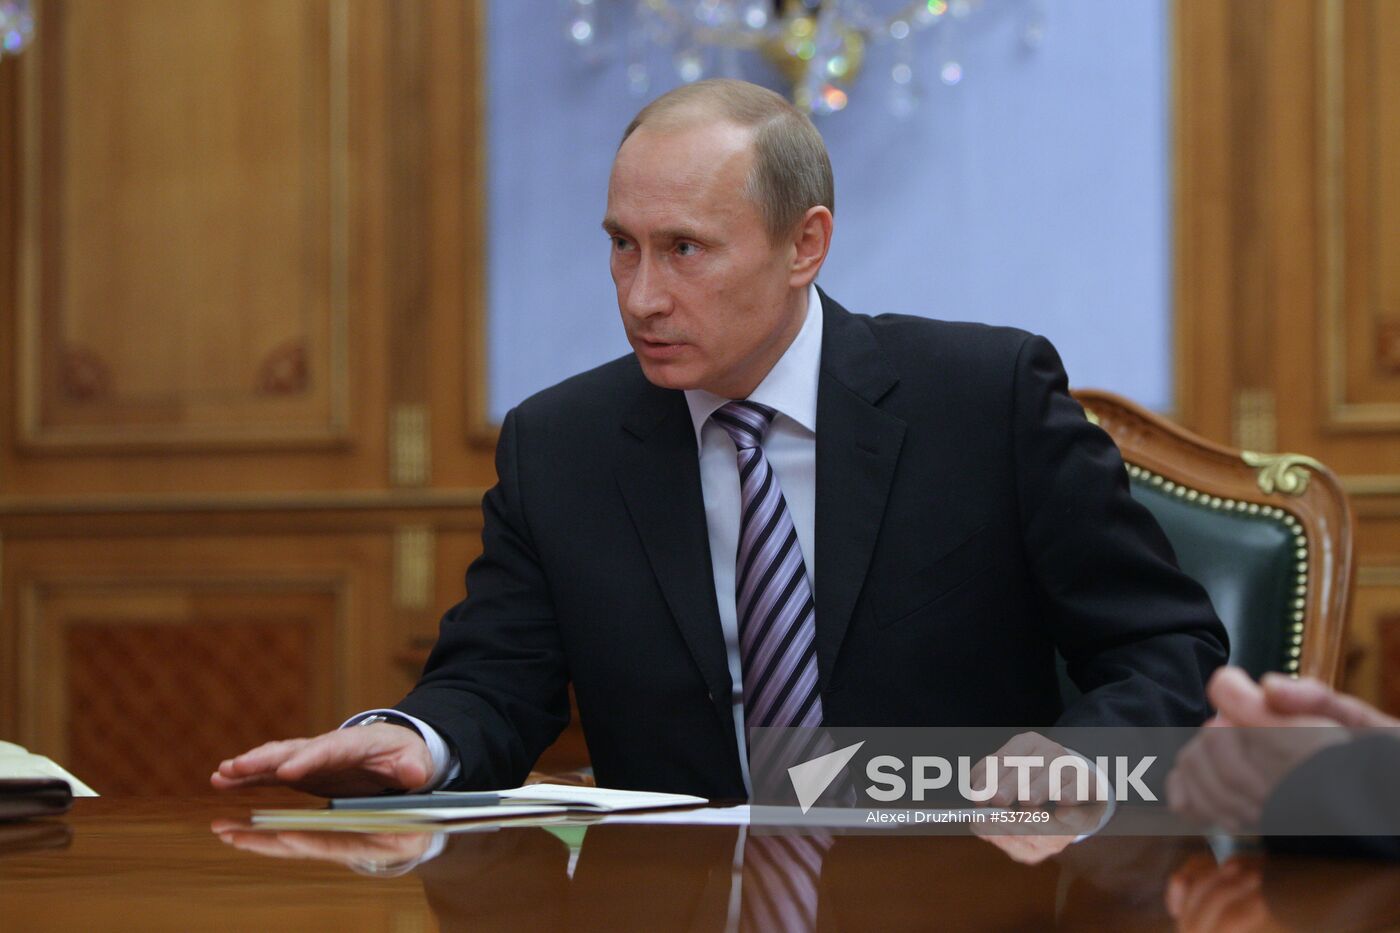 Vladimir Putin chairs meeting